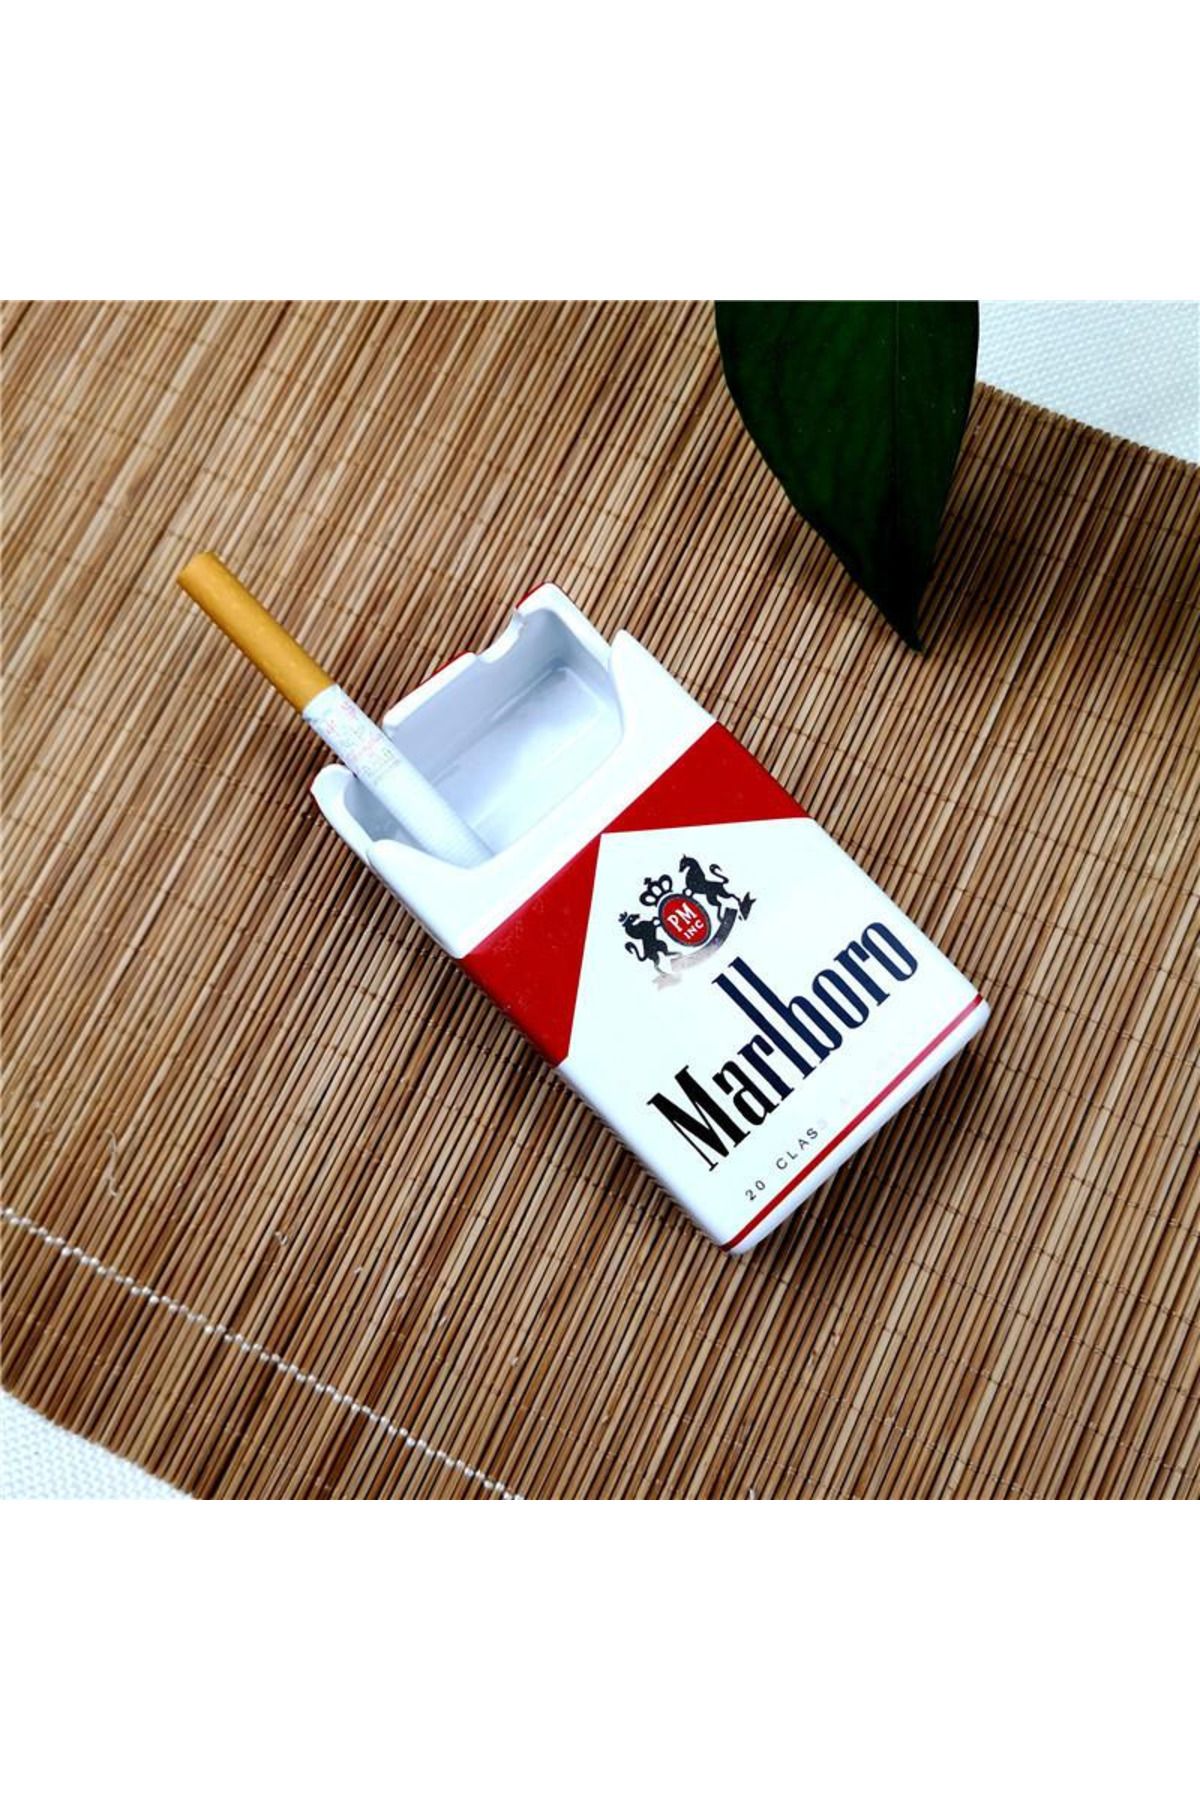 HEDİYEVİM Dekoratif Sigara Paketi Şeklinde Küllük Sigara Paketi Şeklinde Seramik Kül Tablası Marlboro Model